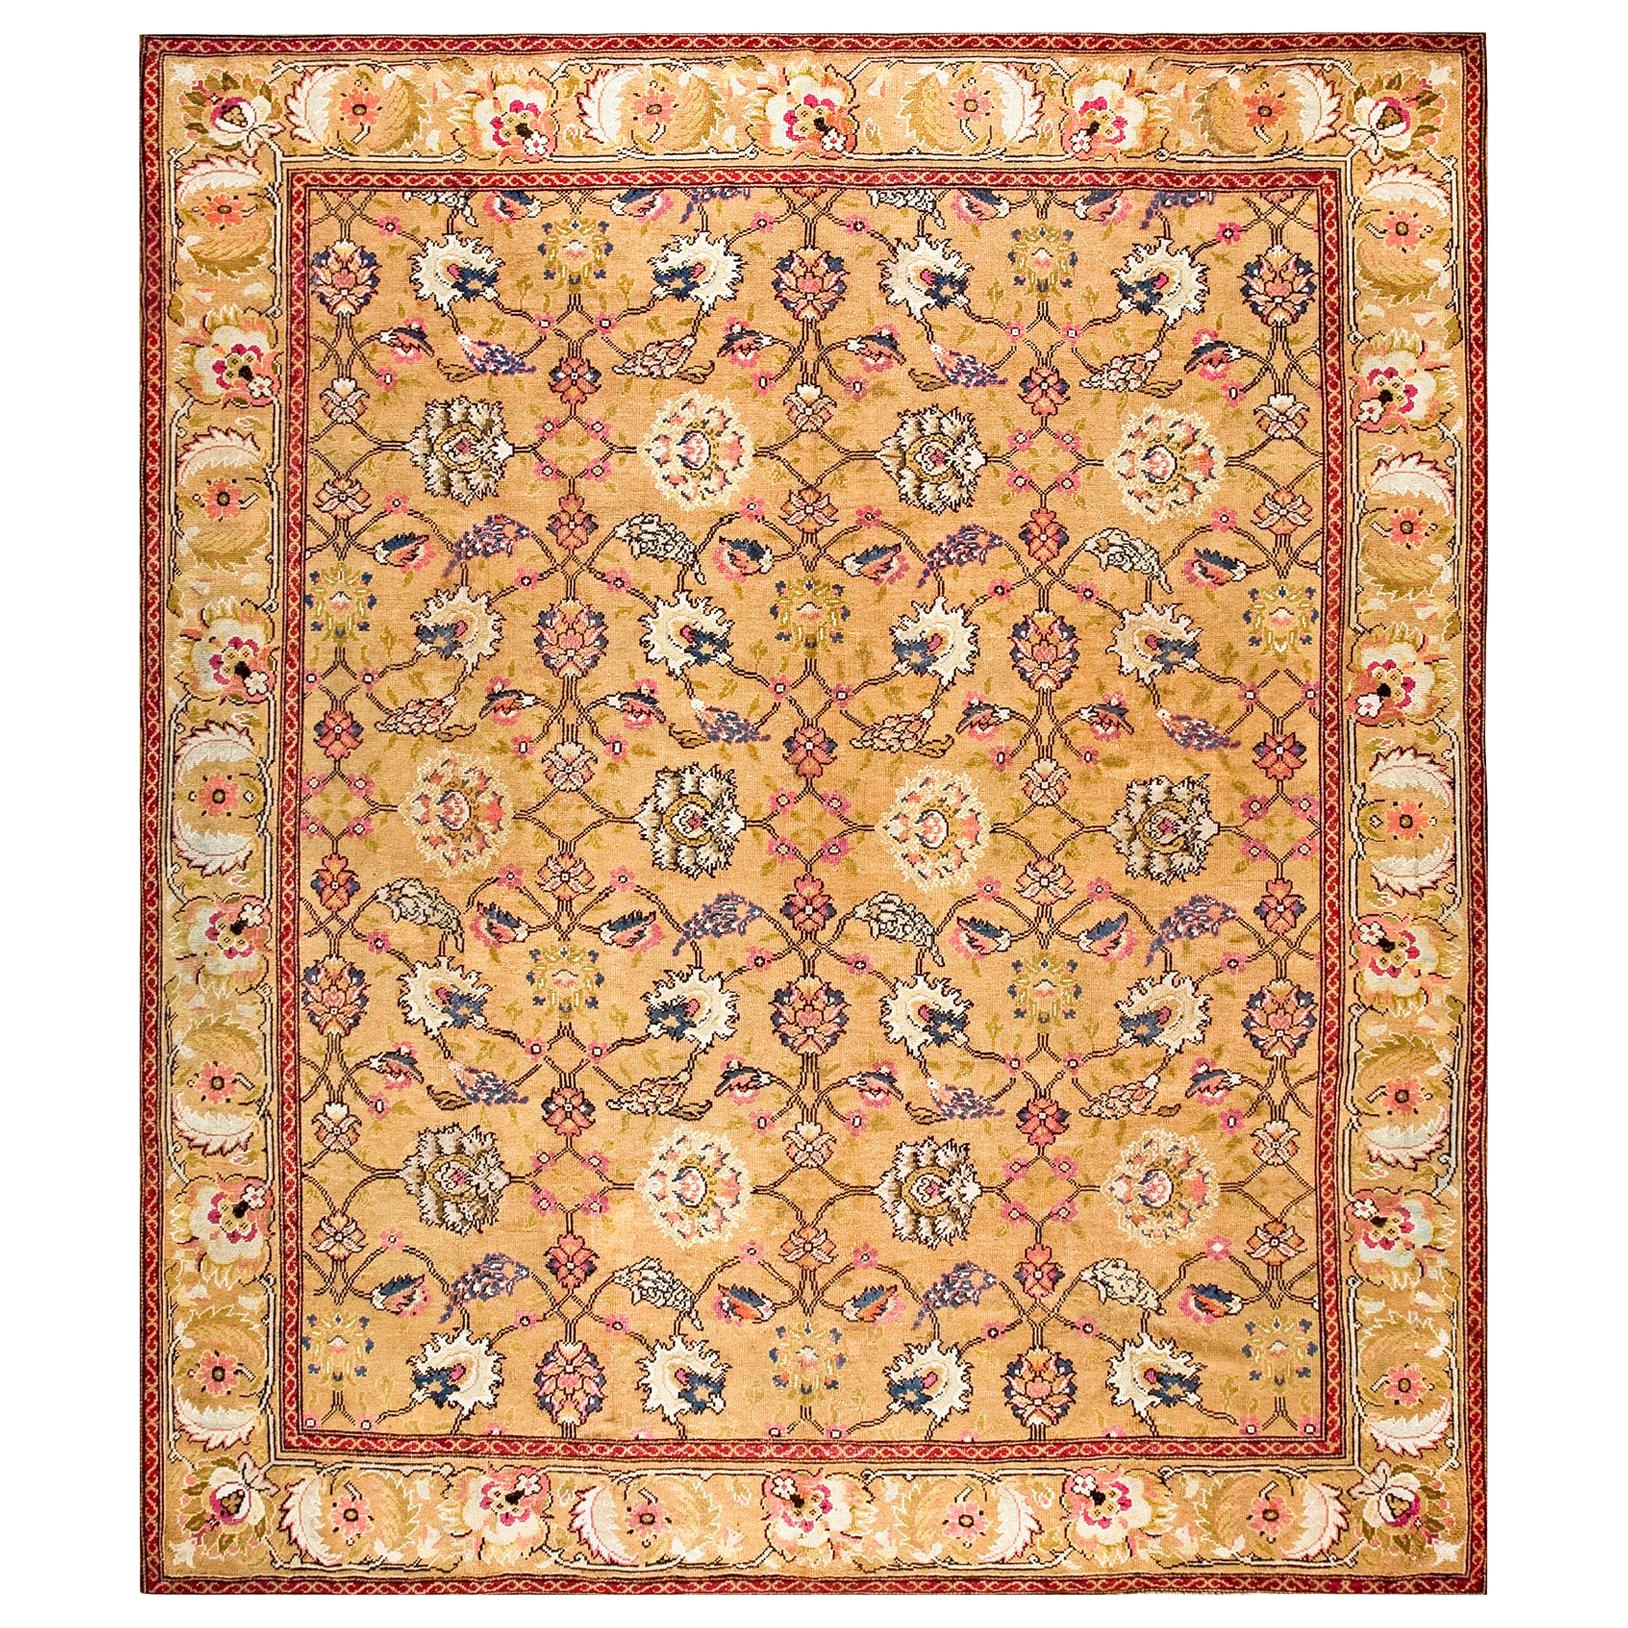 Mid-18th Century English Axminster Carpet ( 12' x 14' - 366 x 427 )